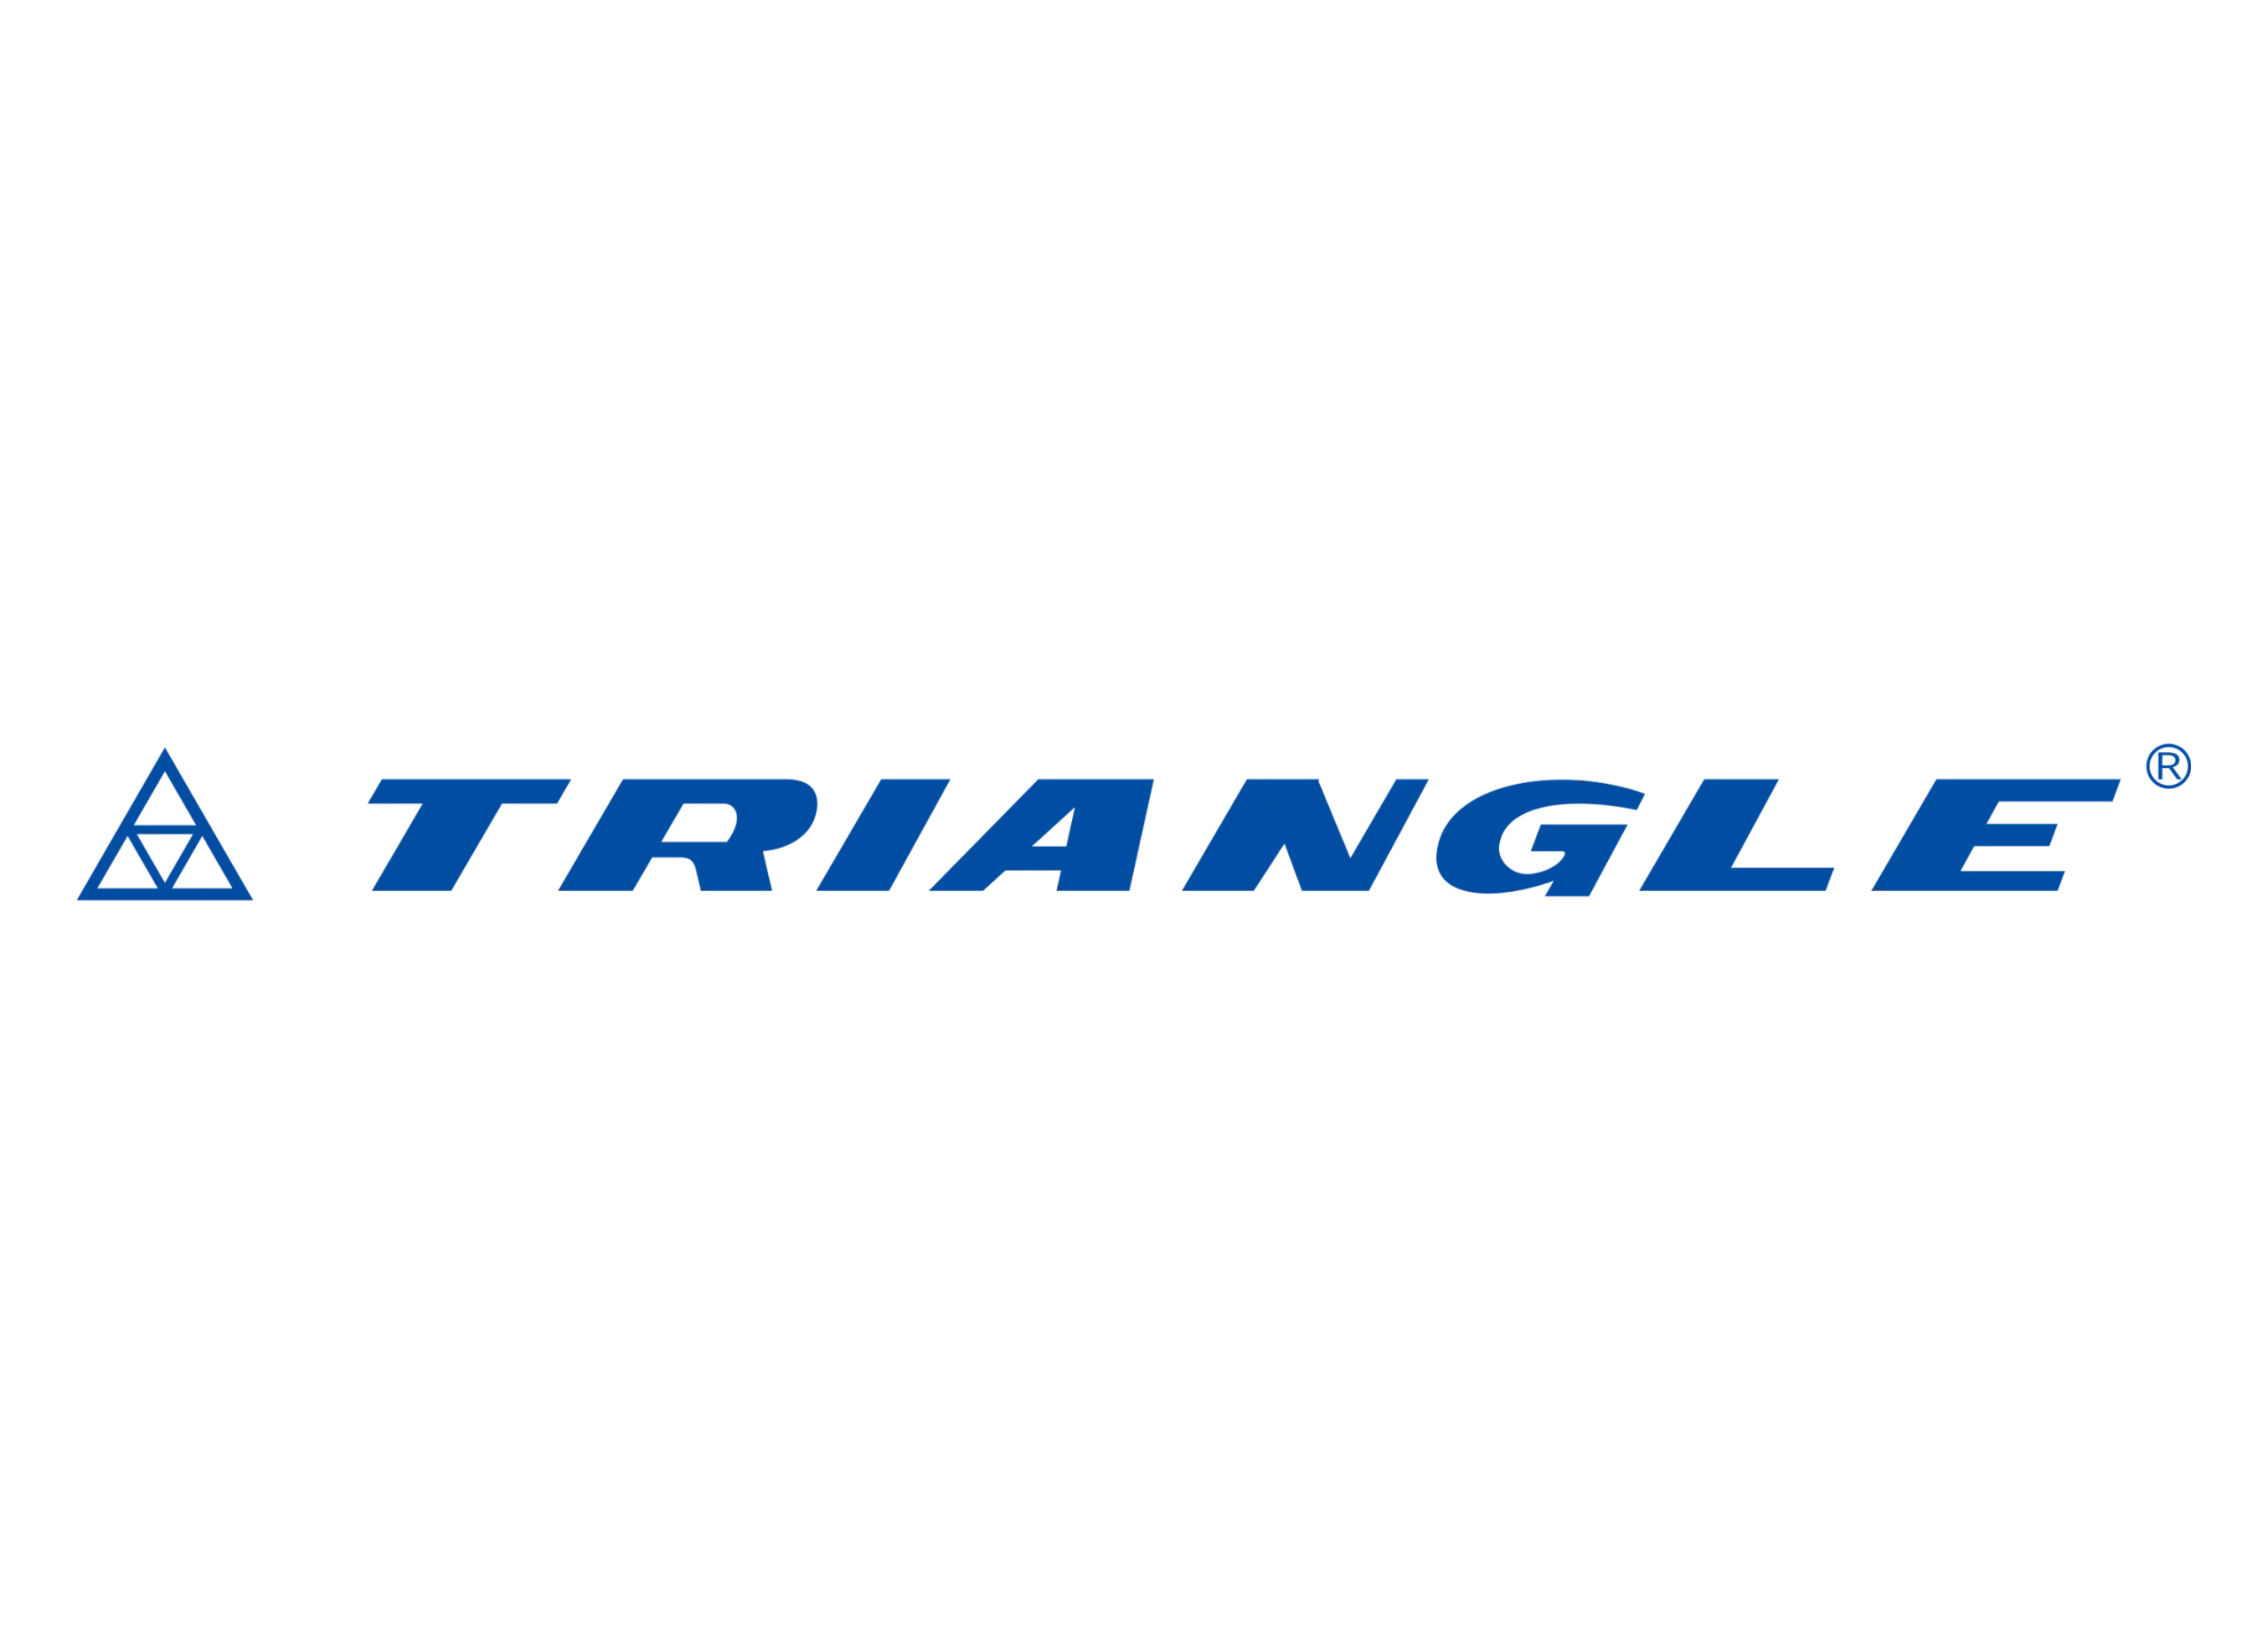 Triangle logo present